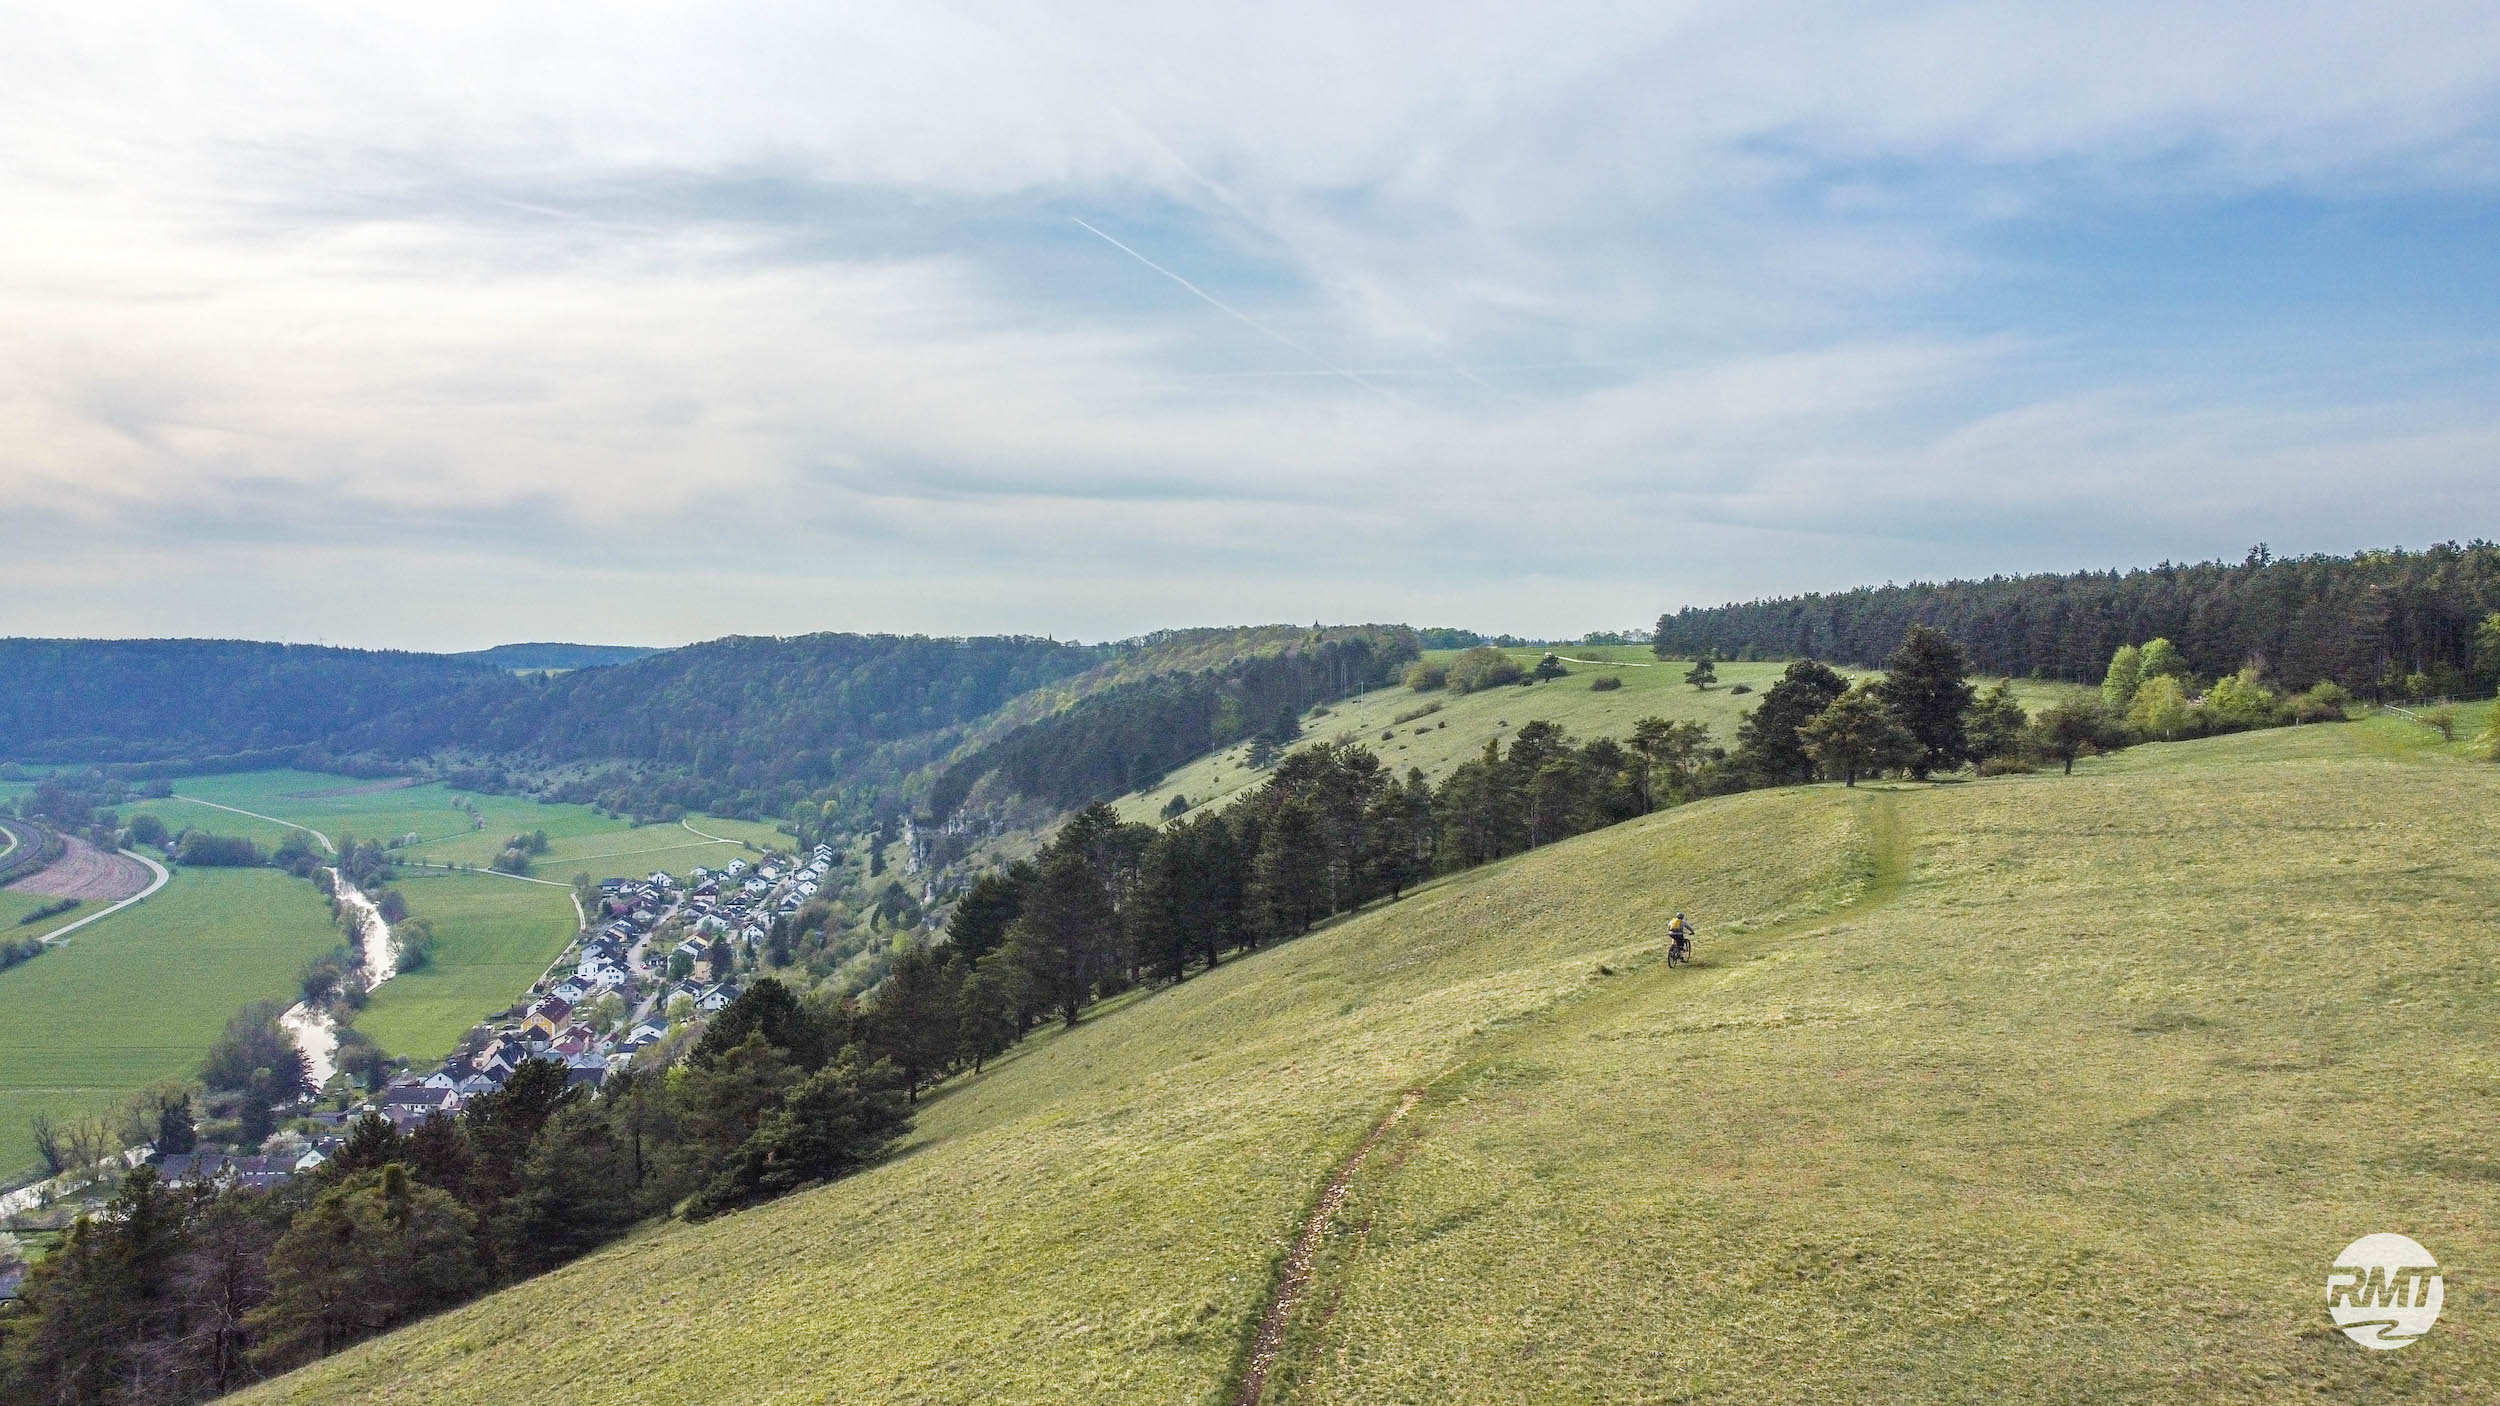 MTB Tour eBike Drone Altmühltal Bayern - beste Trails - Treuchlingen - Rock my Trail Bikeschule -43